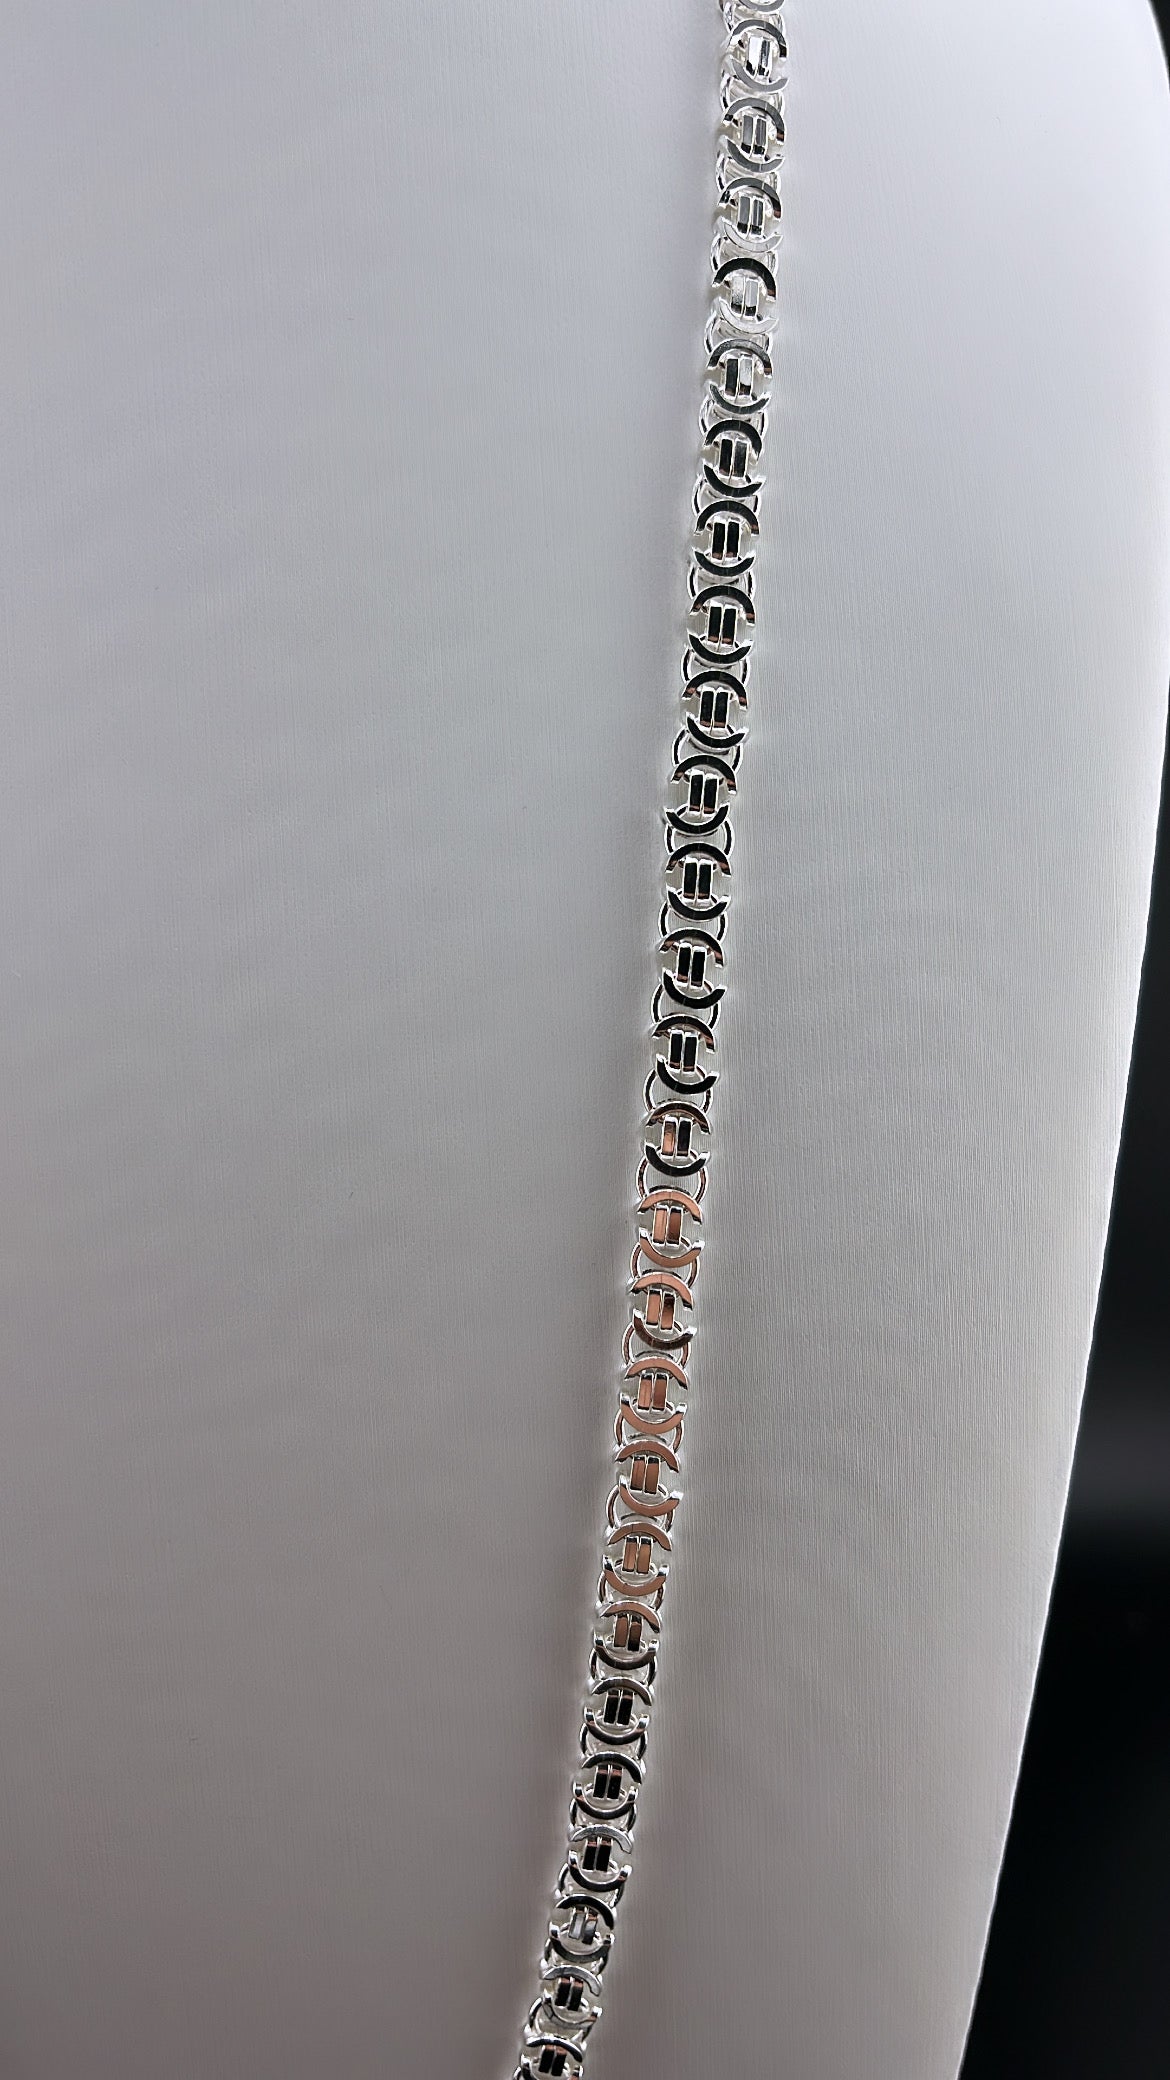 Flache Königskette (Etrsuker) - 5mm breit I Silber 925